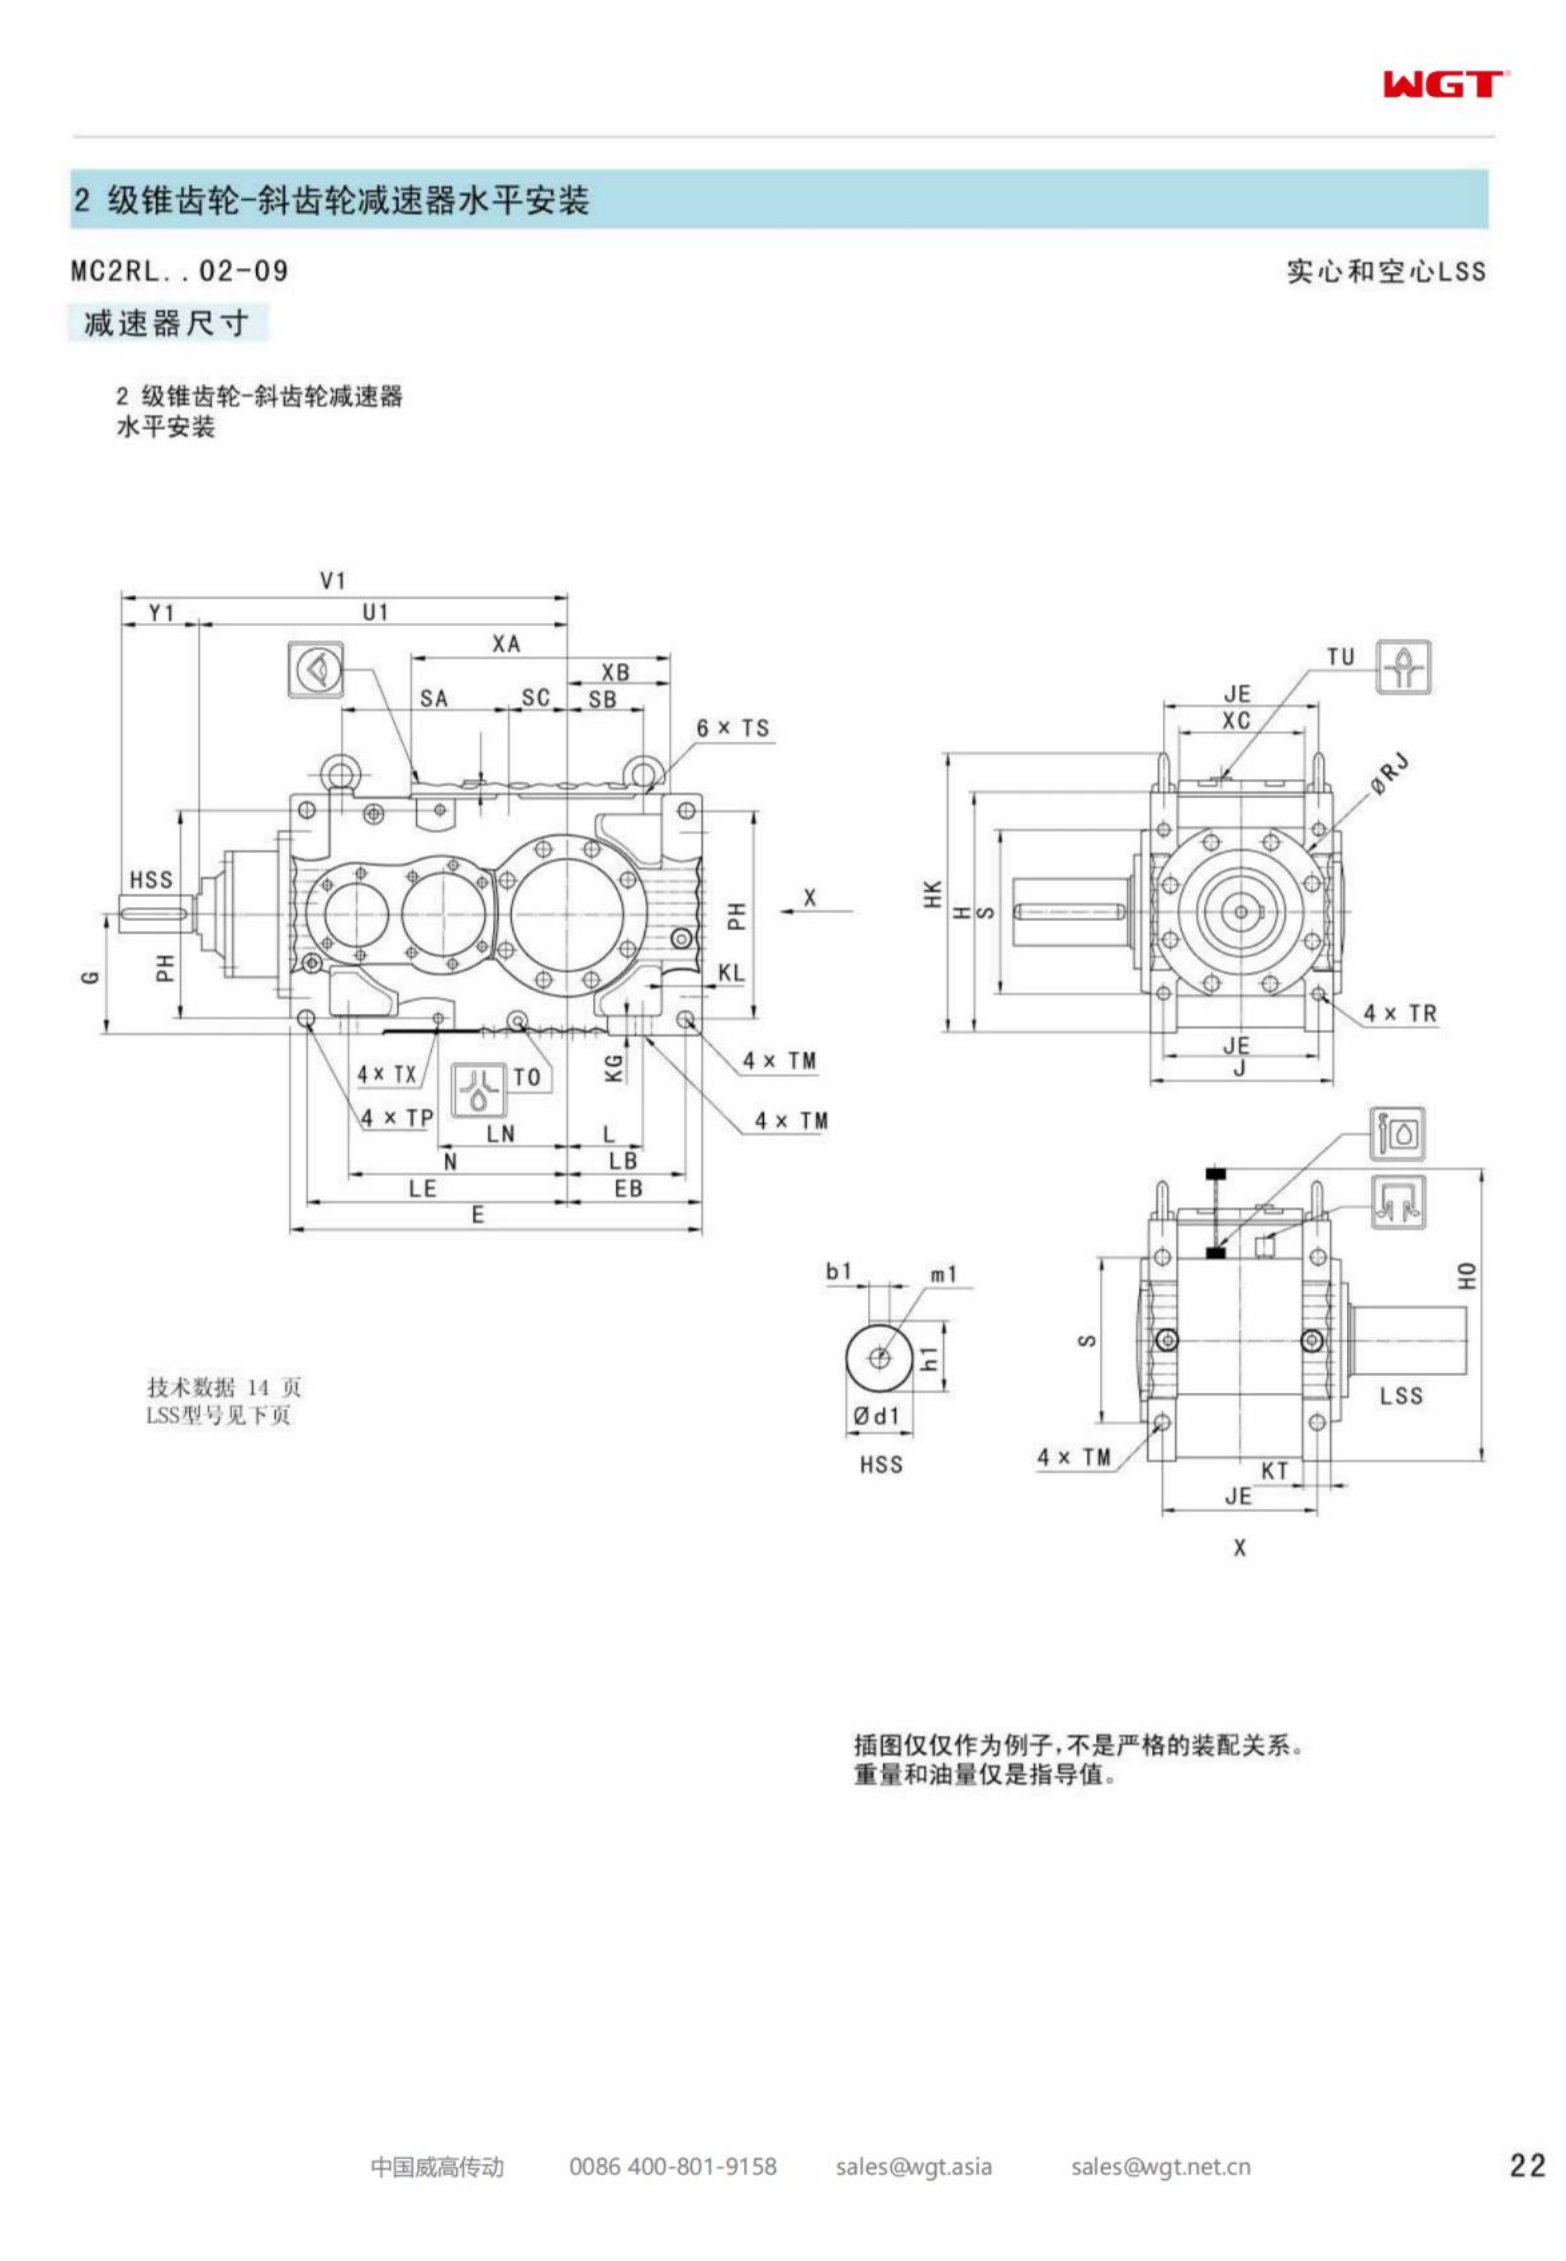 MC2RLSF05 replaces _SEW_MC_Series gearbox (patent)